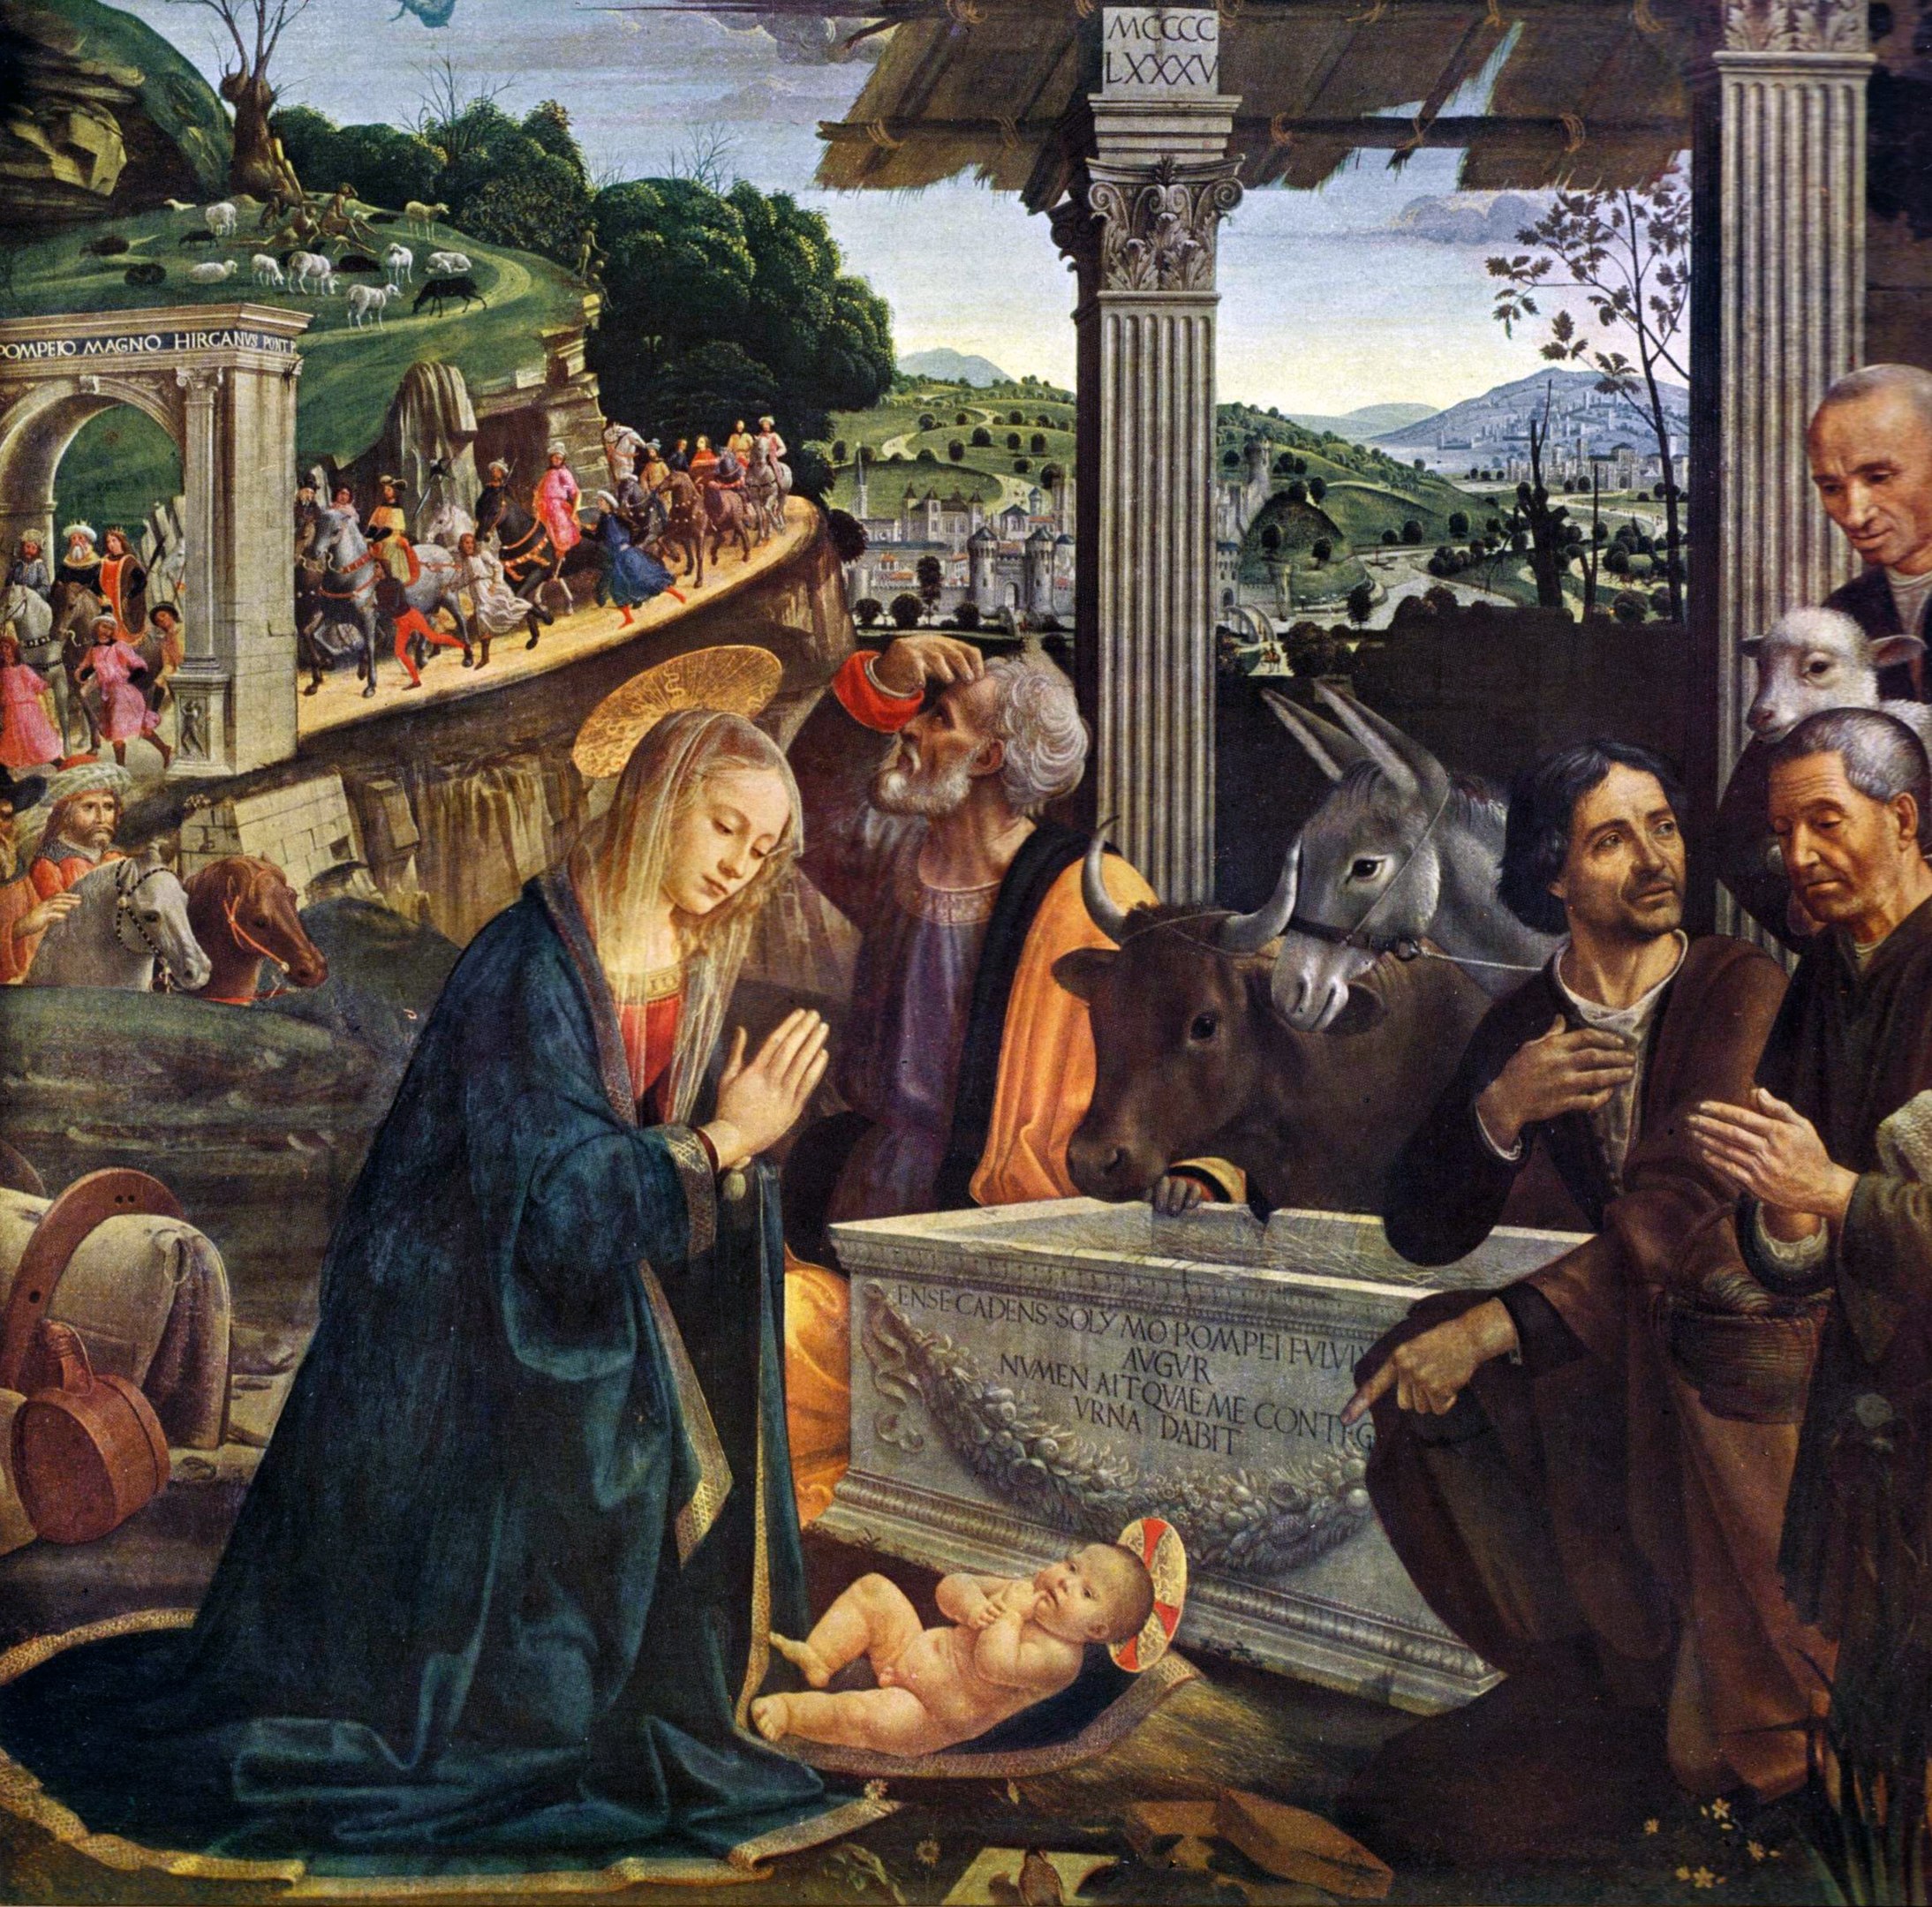 L'Adoration des bergers by Domenico Ghirlandaio - 1483-1485 - 167 x 167 cm 